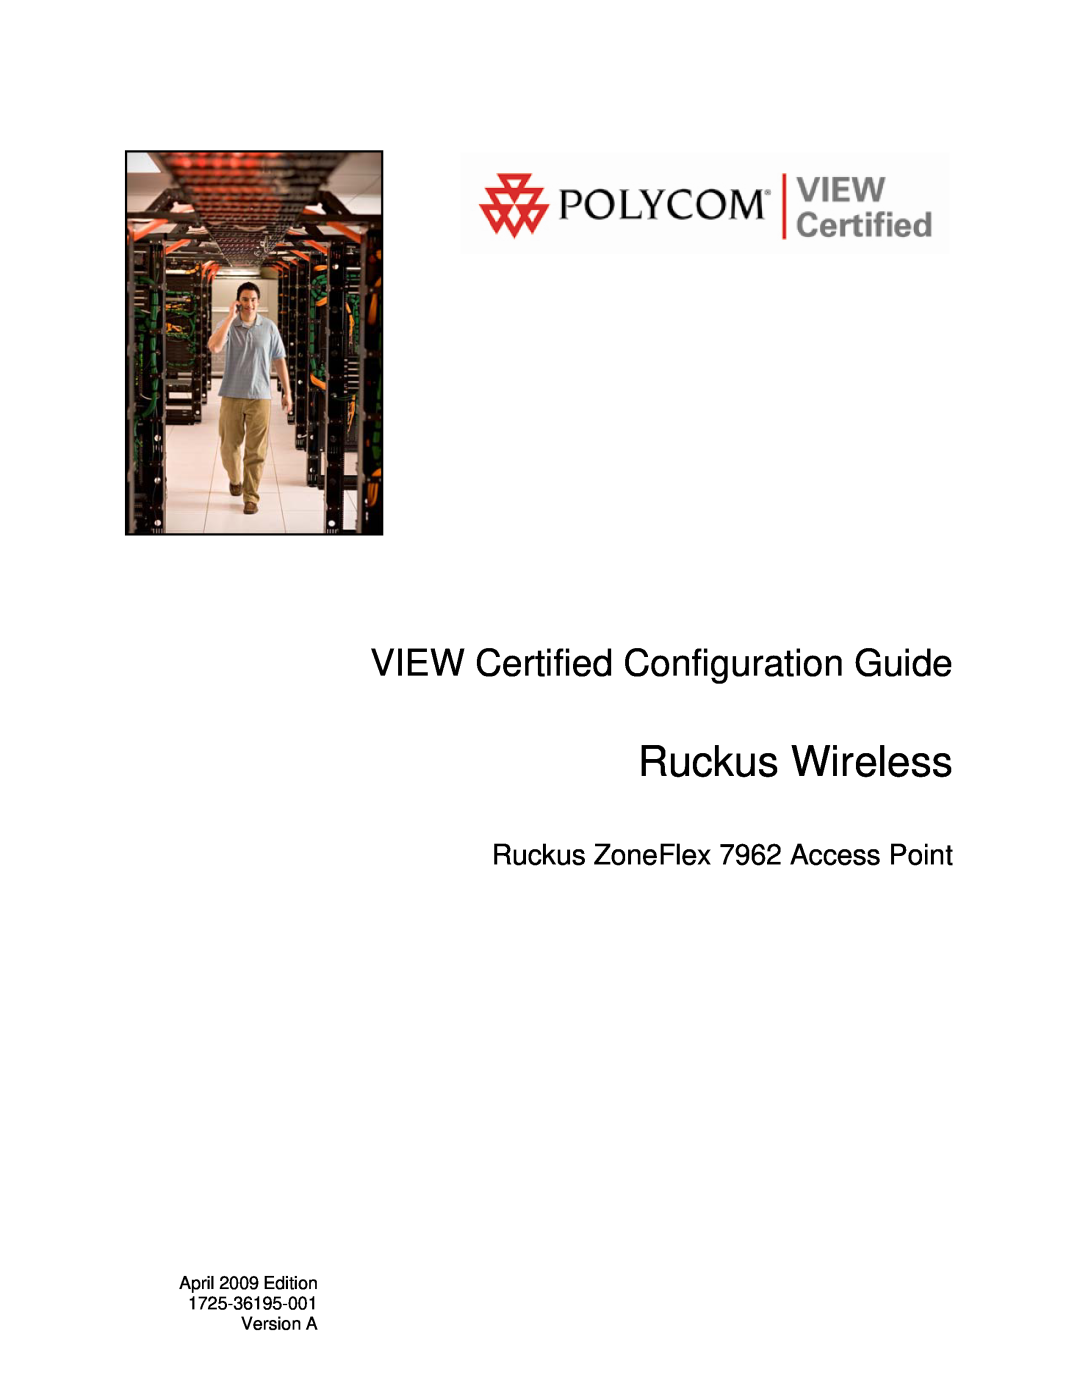 Polycom manual Ruckus Wireless, VIEW Certified Configuration Guide, Ruckus ZoneFlex 7962 Access Point 